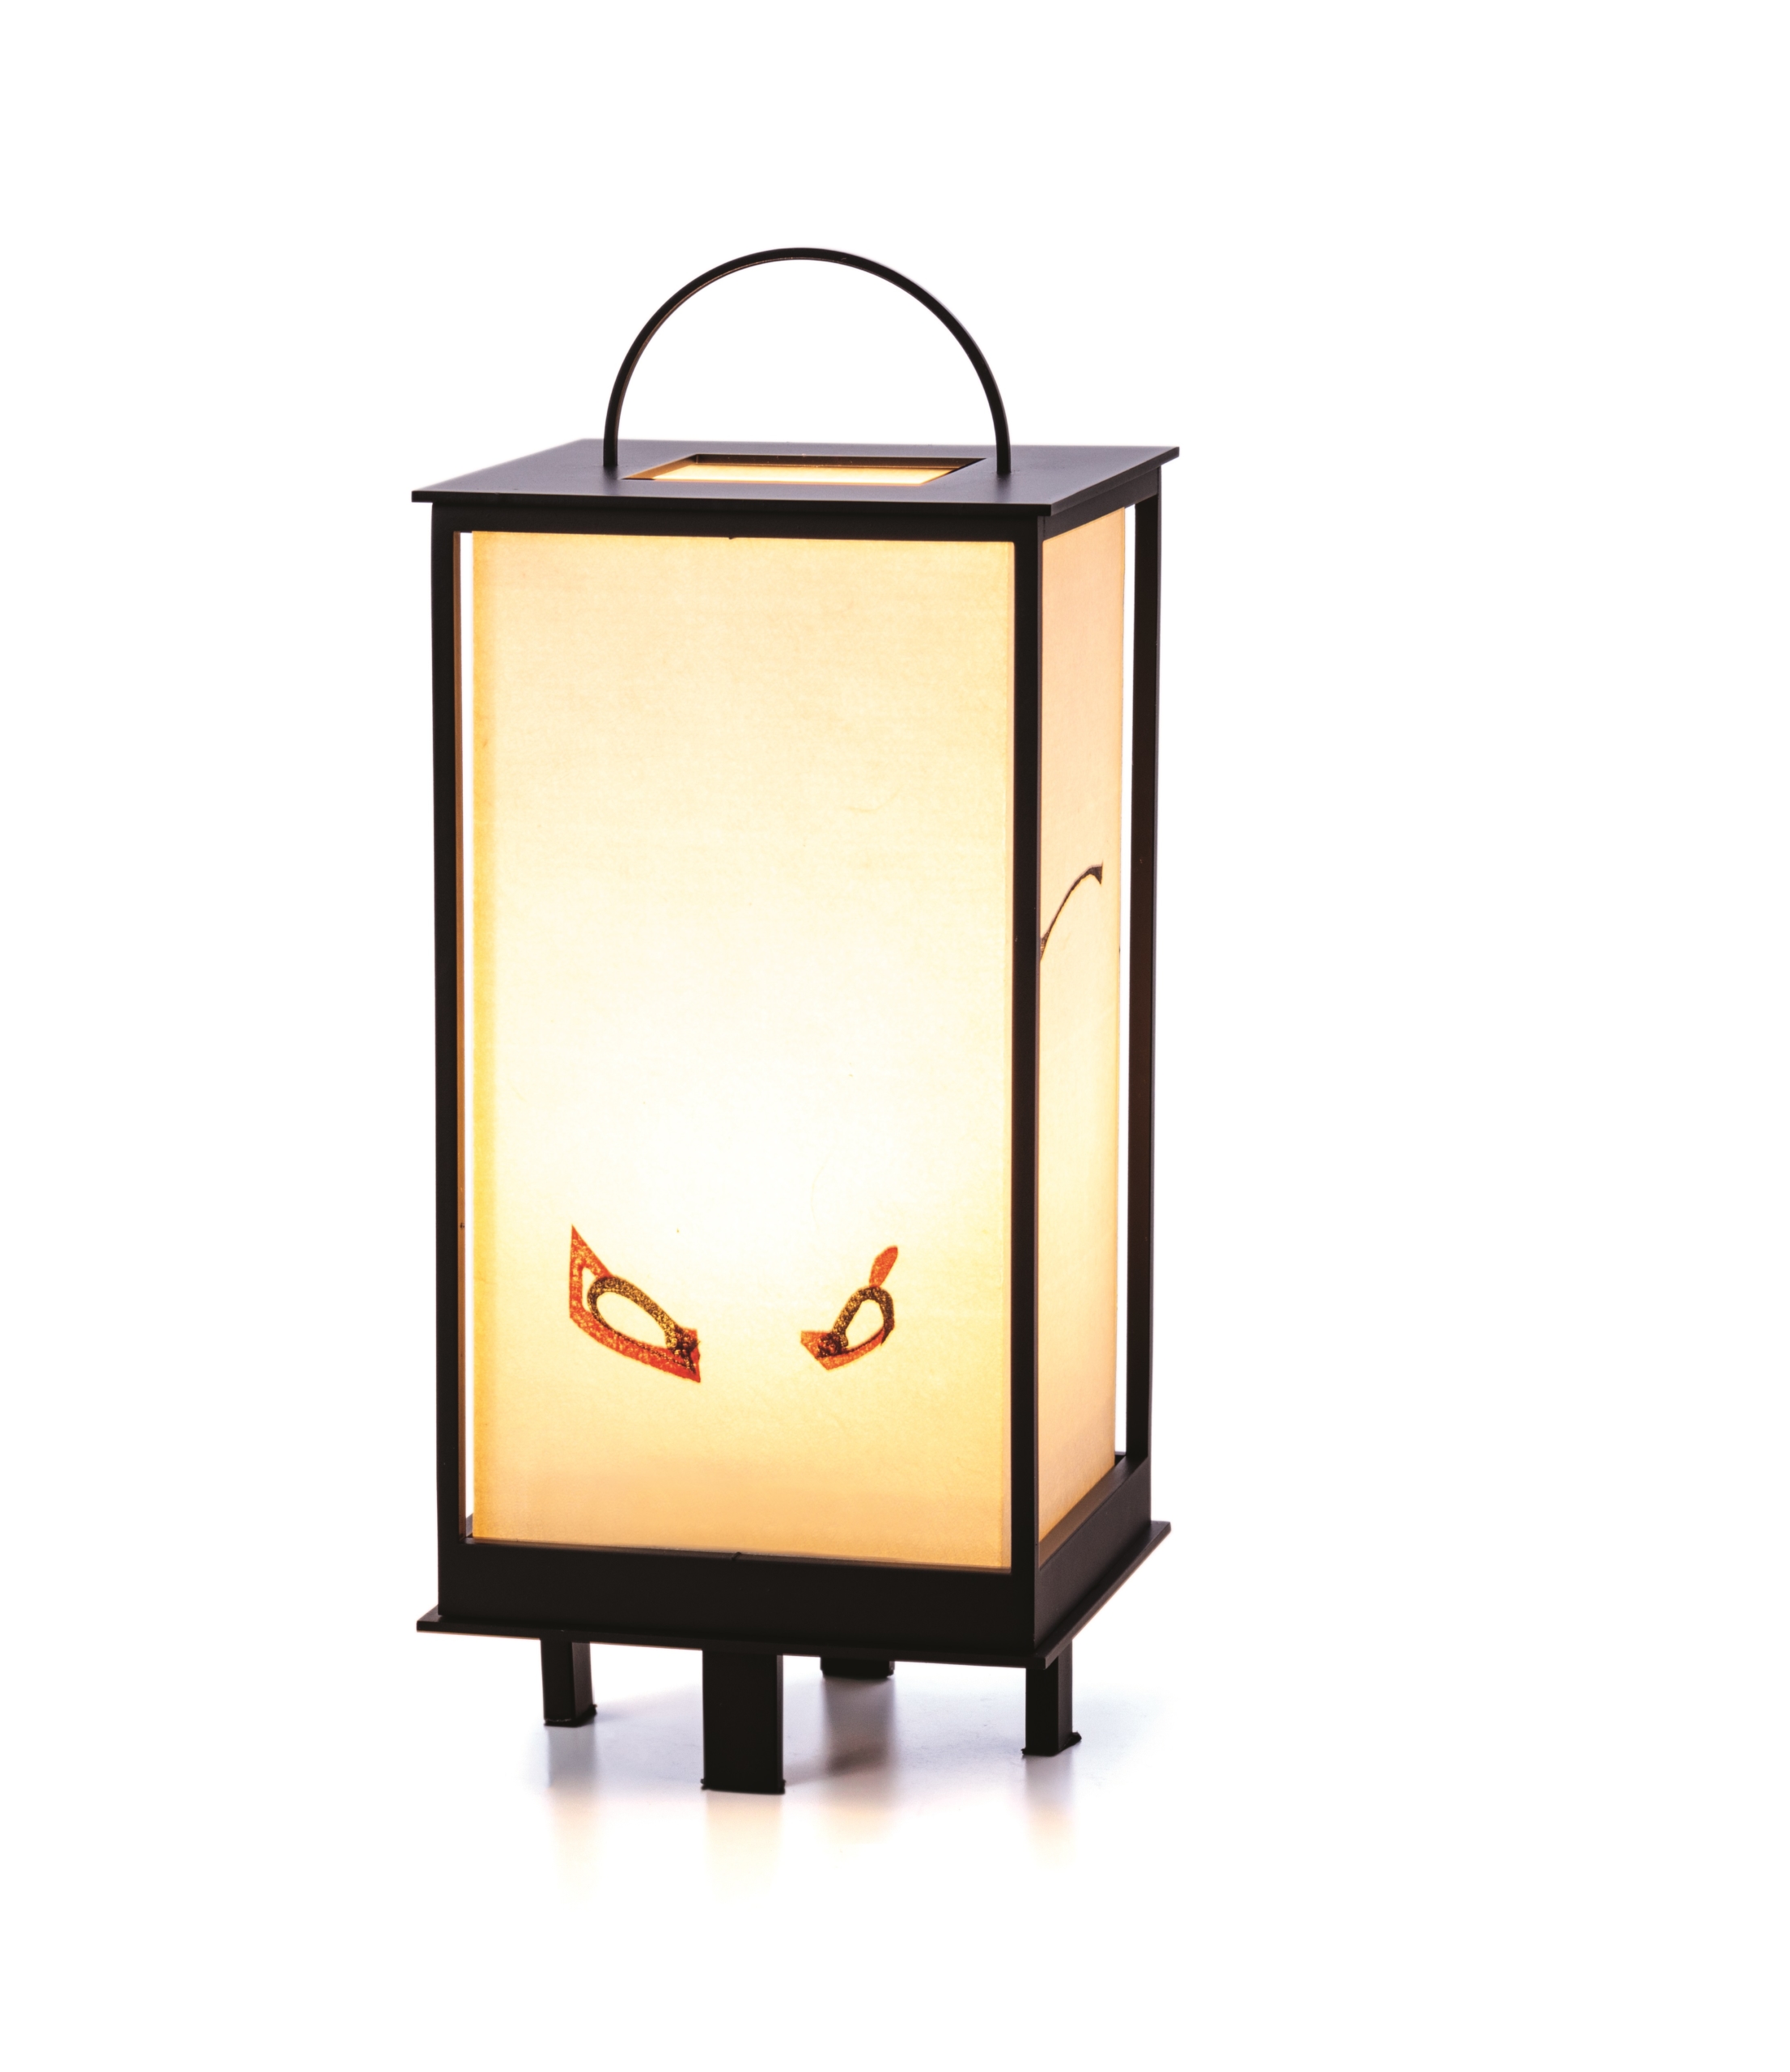 【Takahashi Kobo】Ukiyo-e illuminated by the gentle light of an Andon lantern